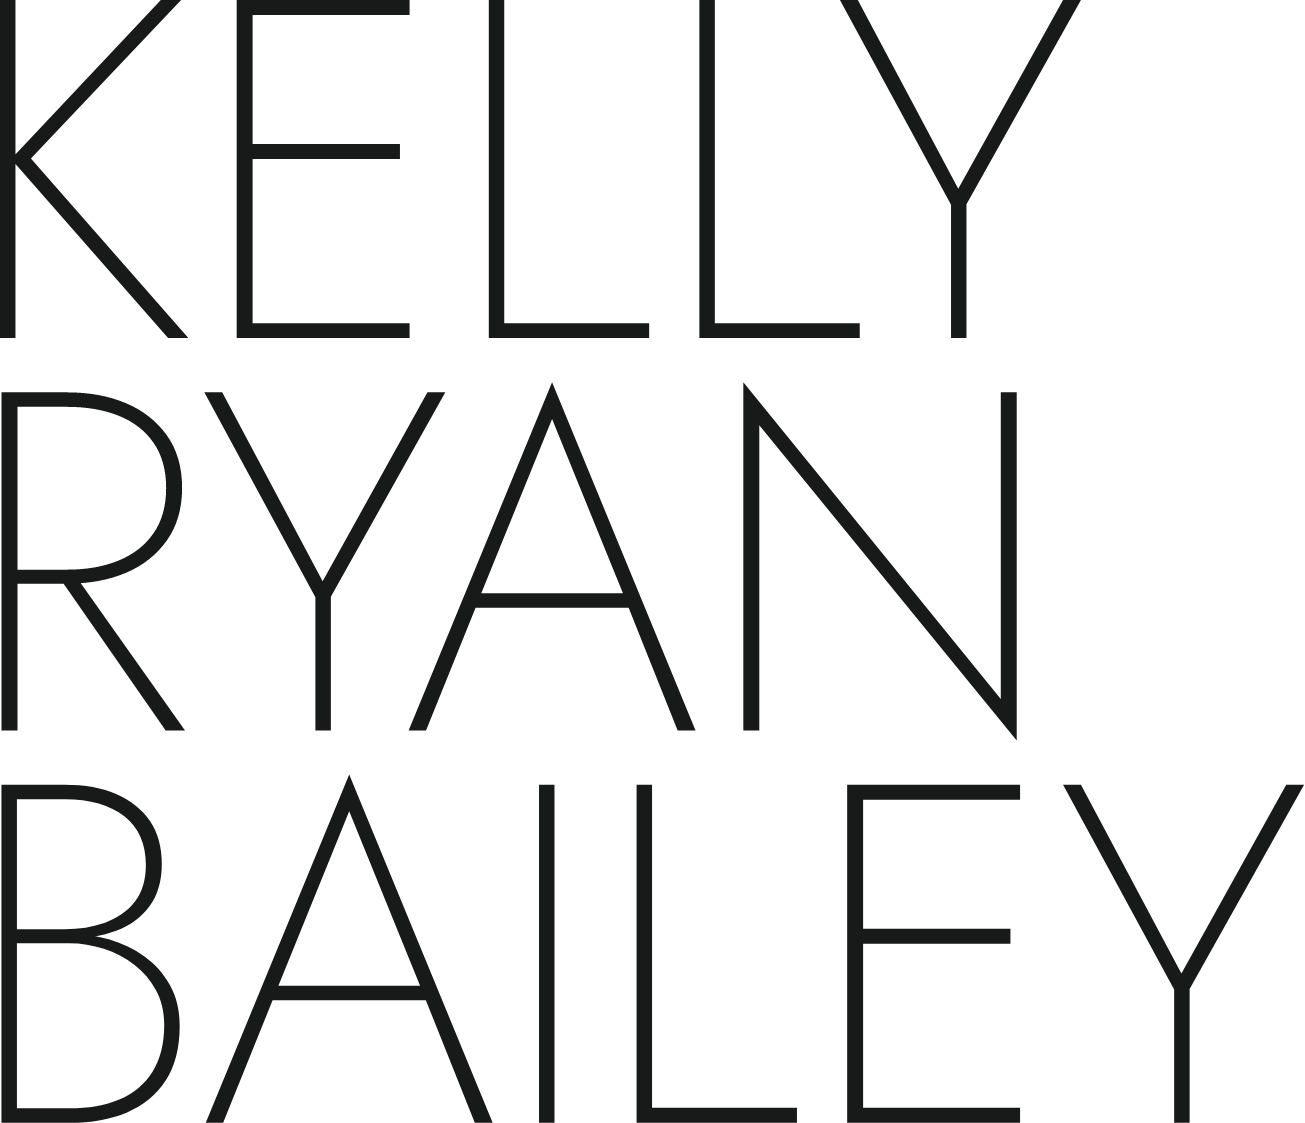 Kelly Ryan Bailey